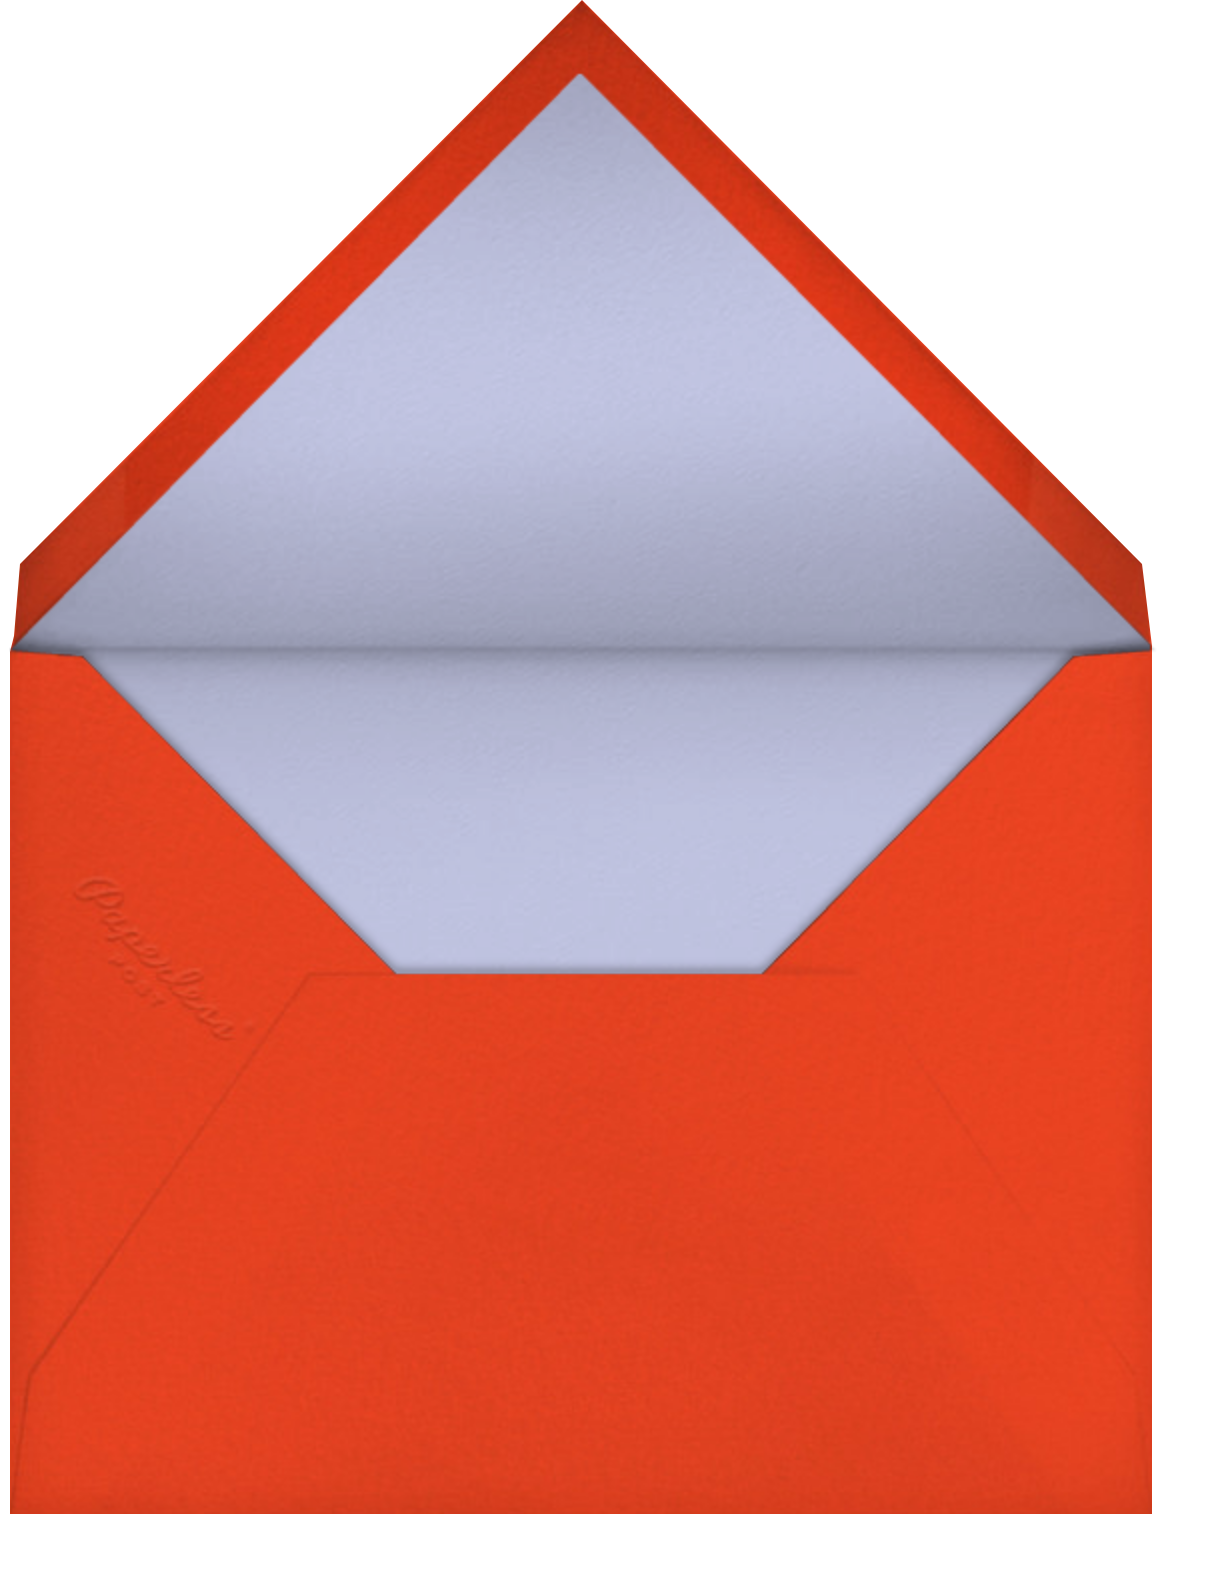 Telephone Receivers - Paperless Post - Envelope